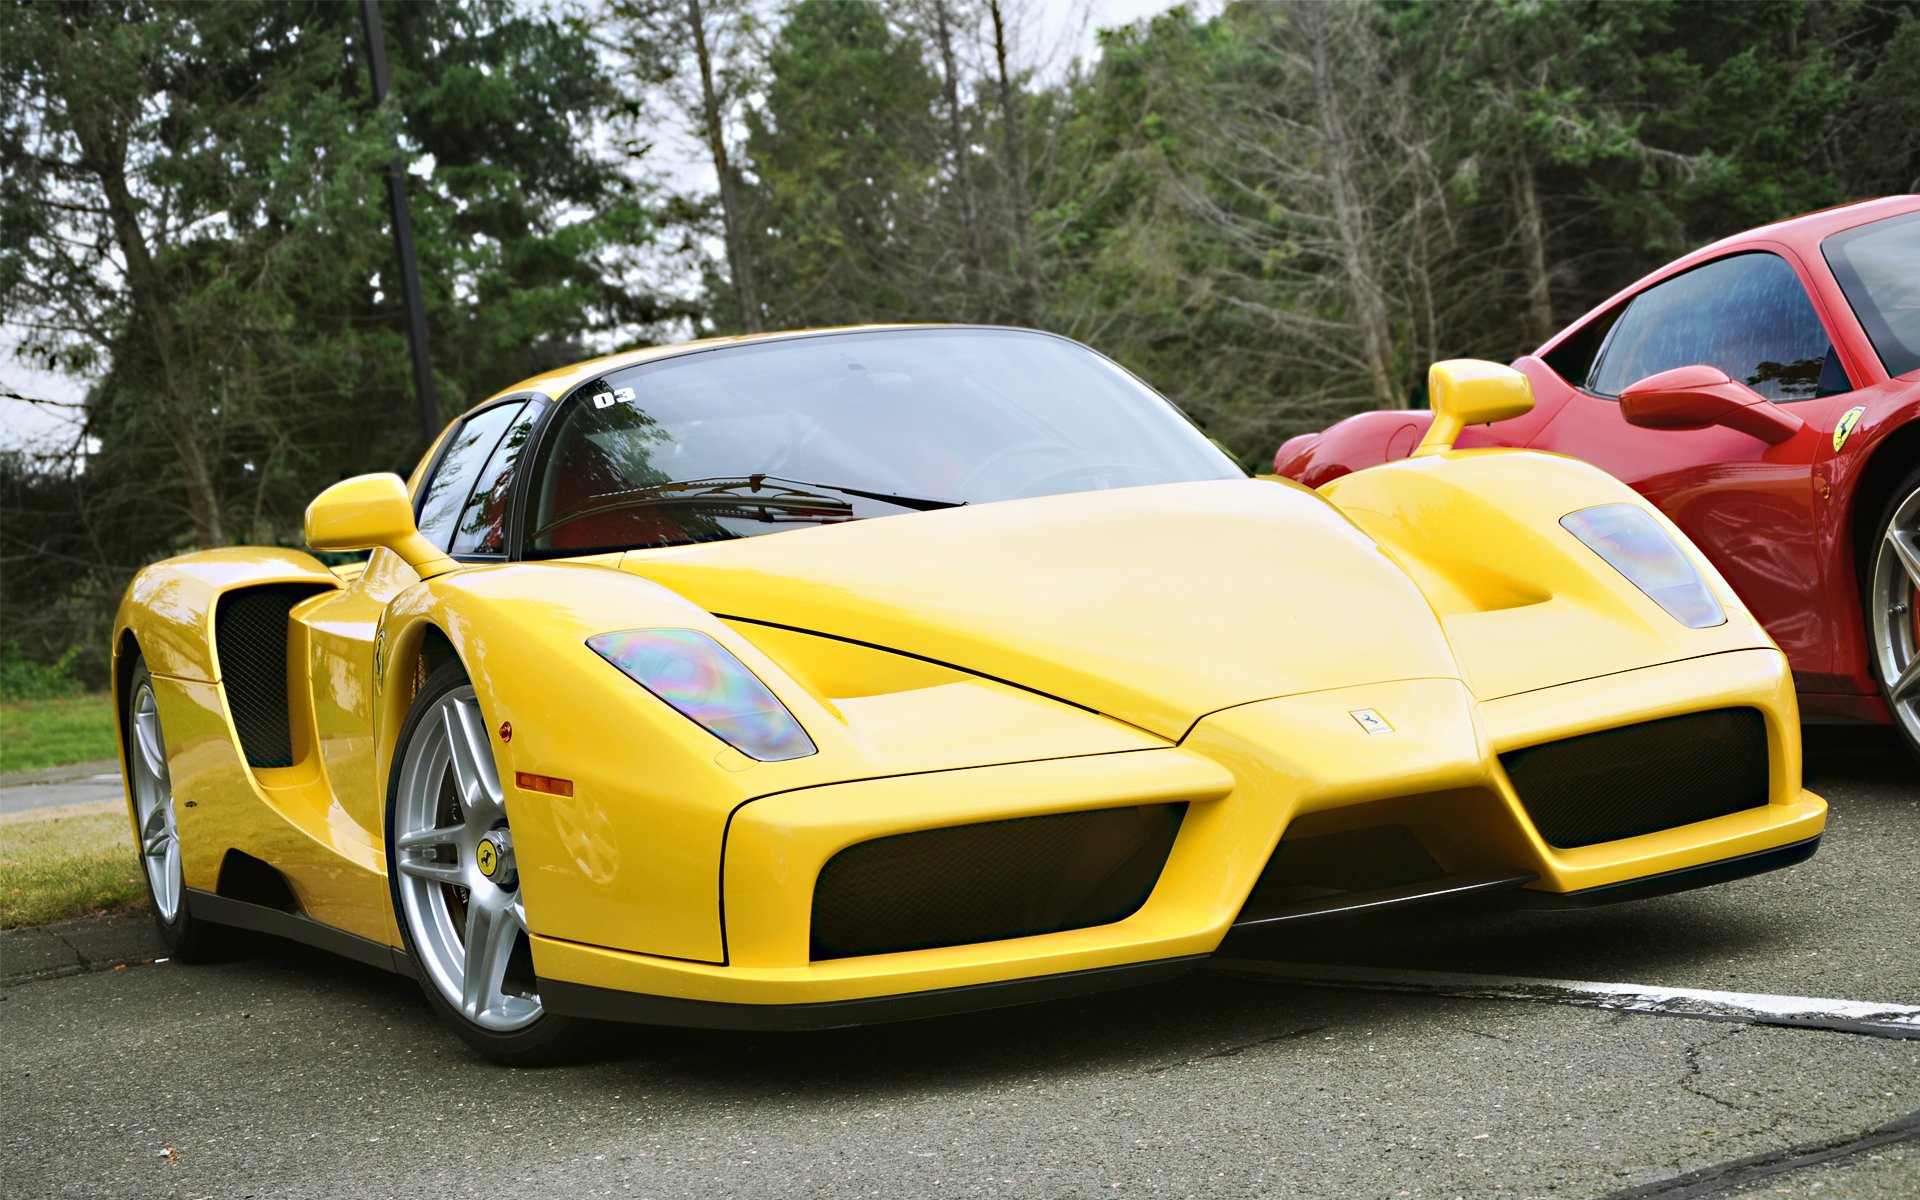 Фотки машин. Феррари Энзо желтая. Энцо Феррари спорткар. Феррари Энзо гоночная. Ferrari Enzo жёлтый цвет.